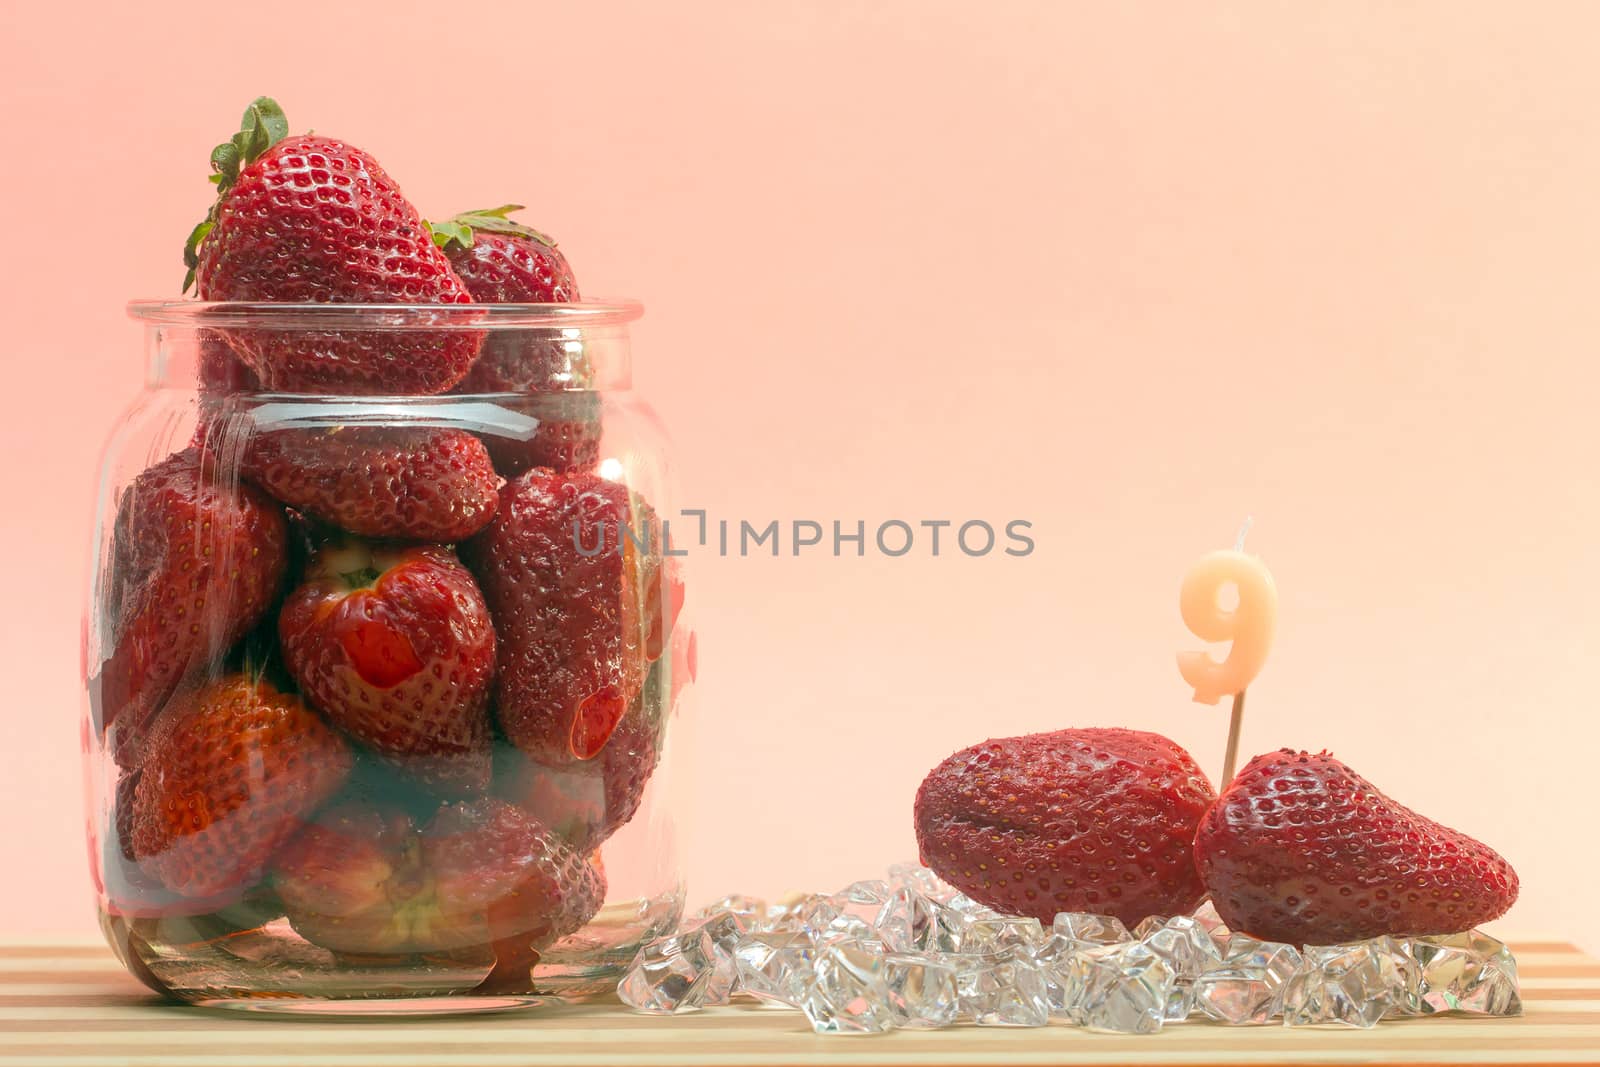 fresh strawberries with birthday candles sticks